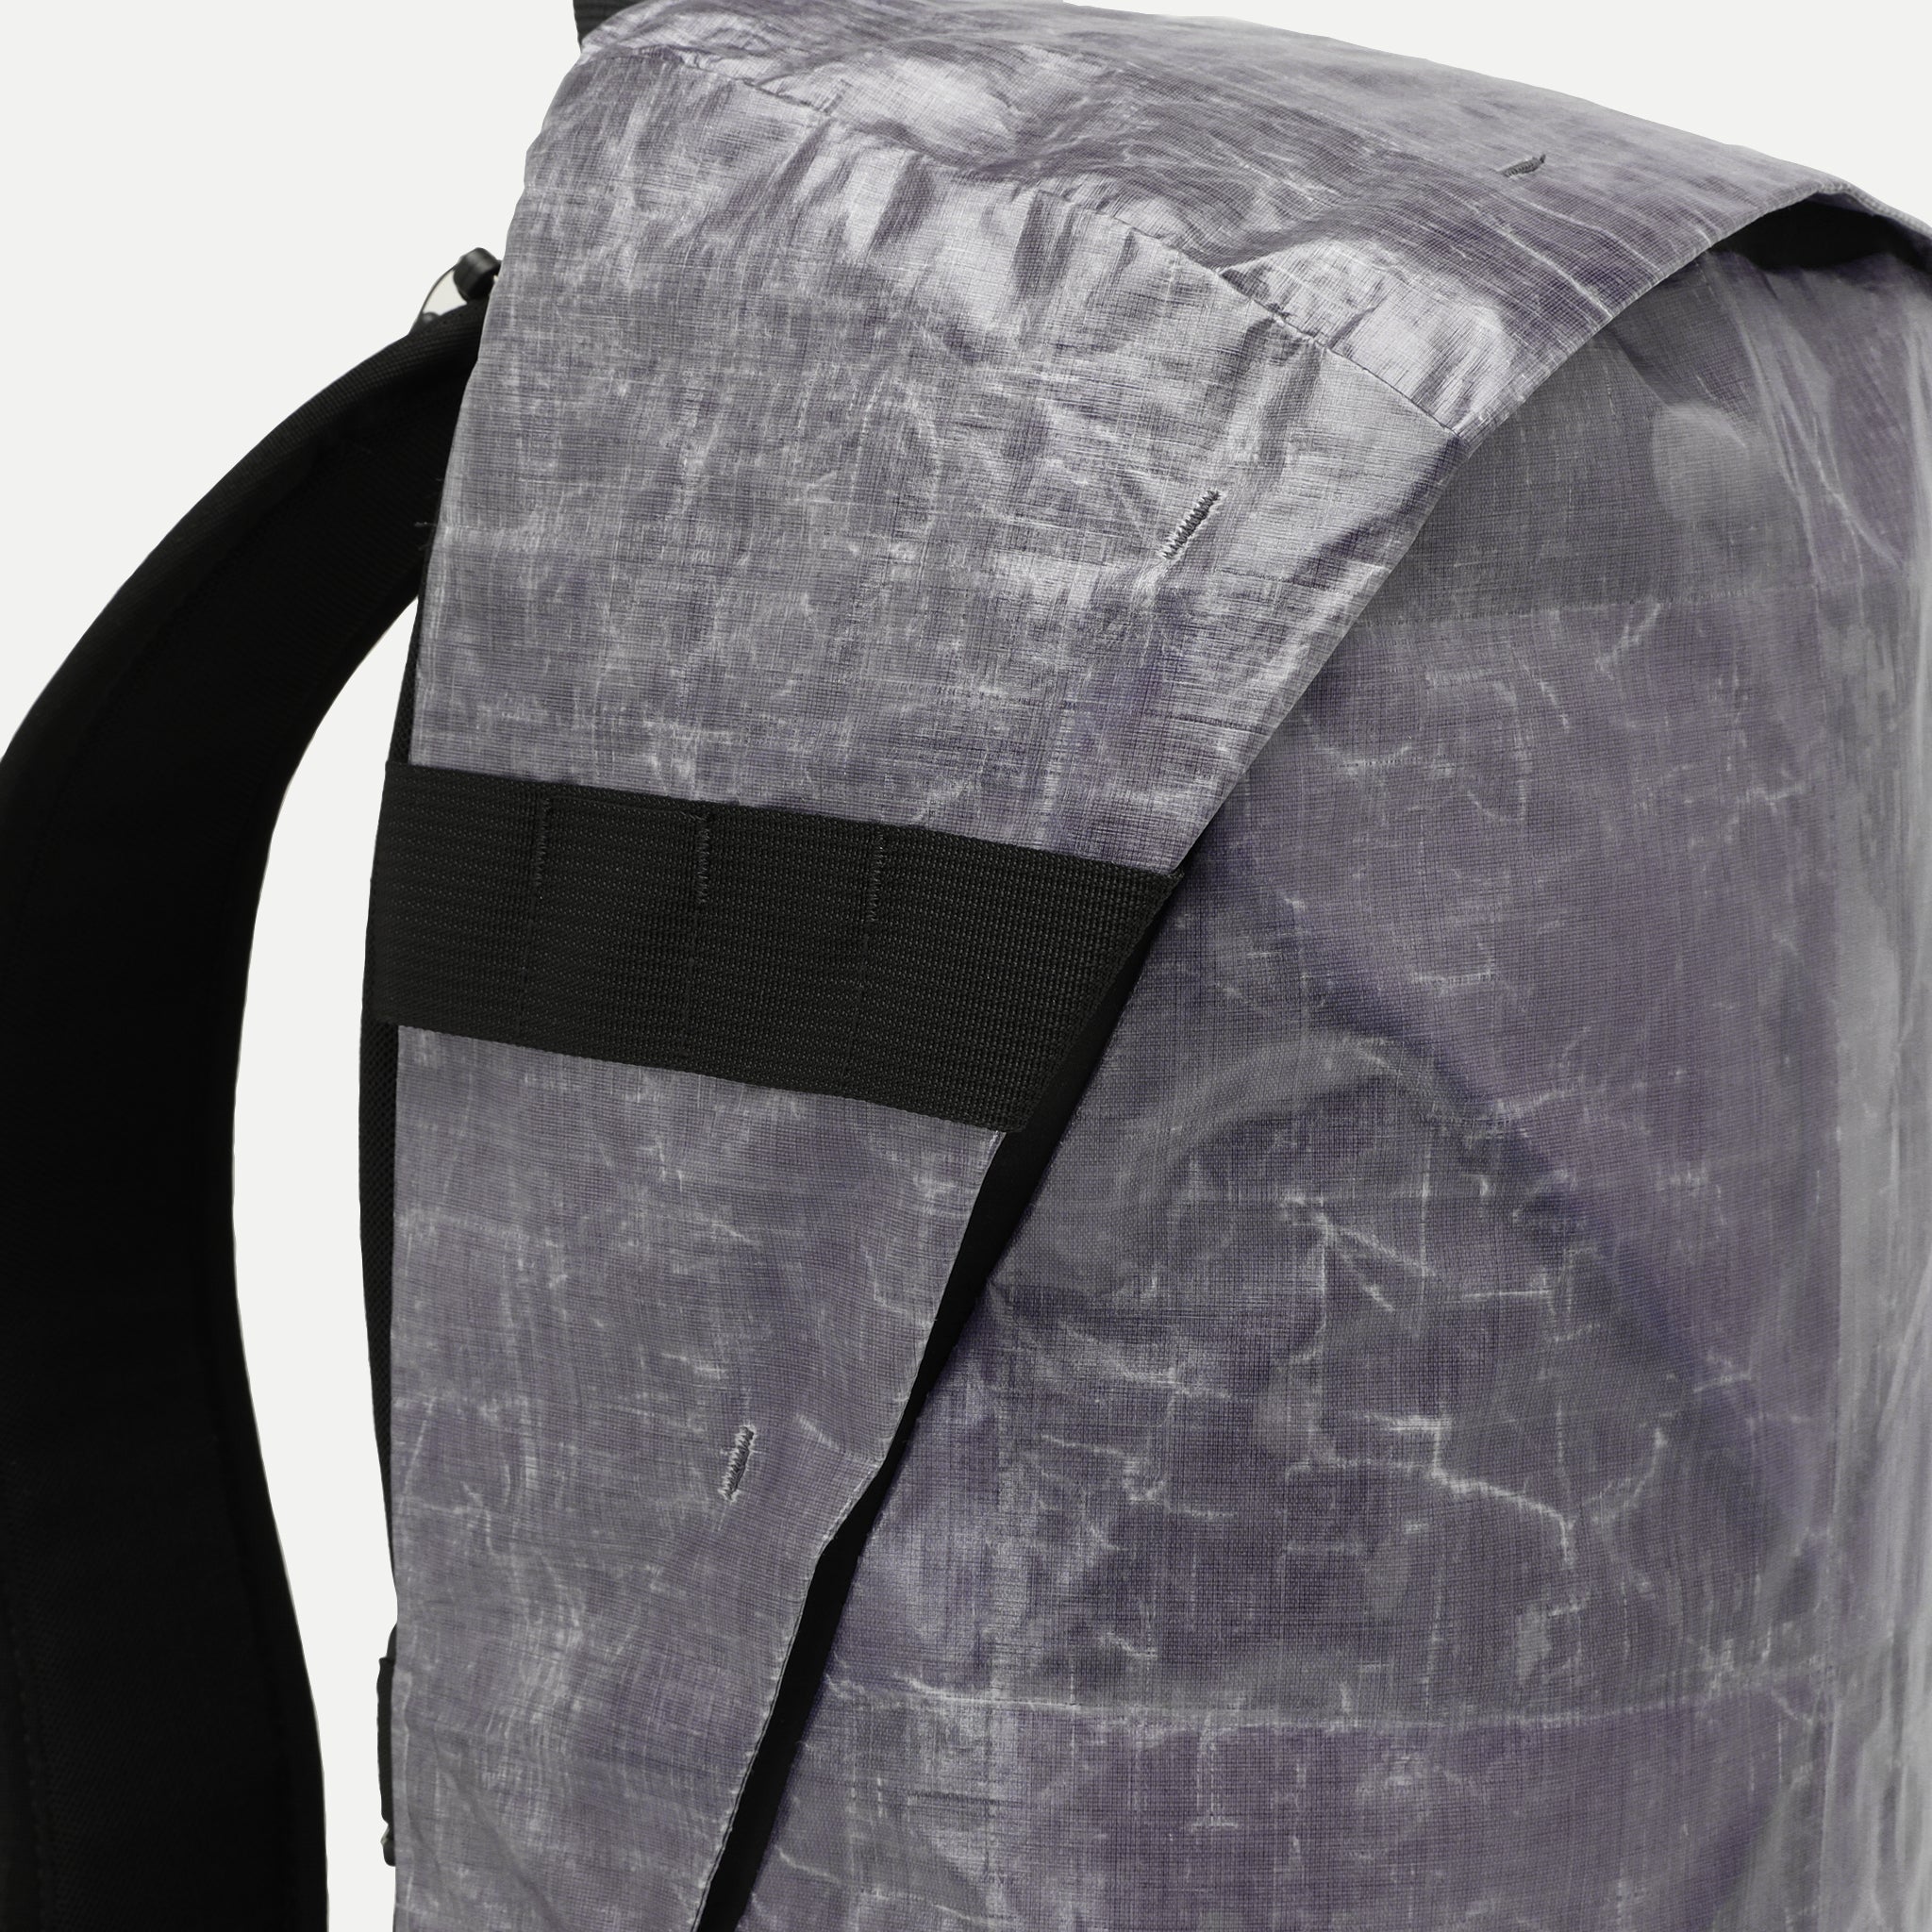 Engineered Garments x DSPTCH Ridgepack - Black